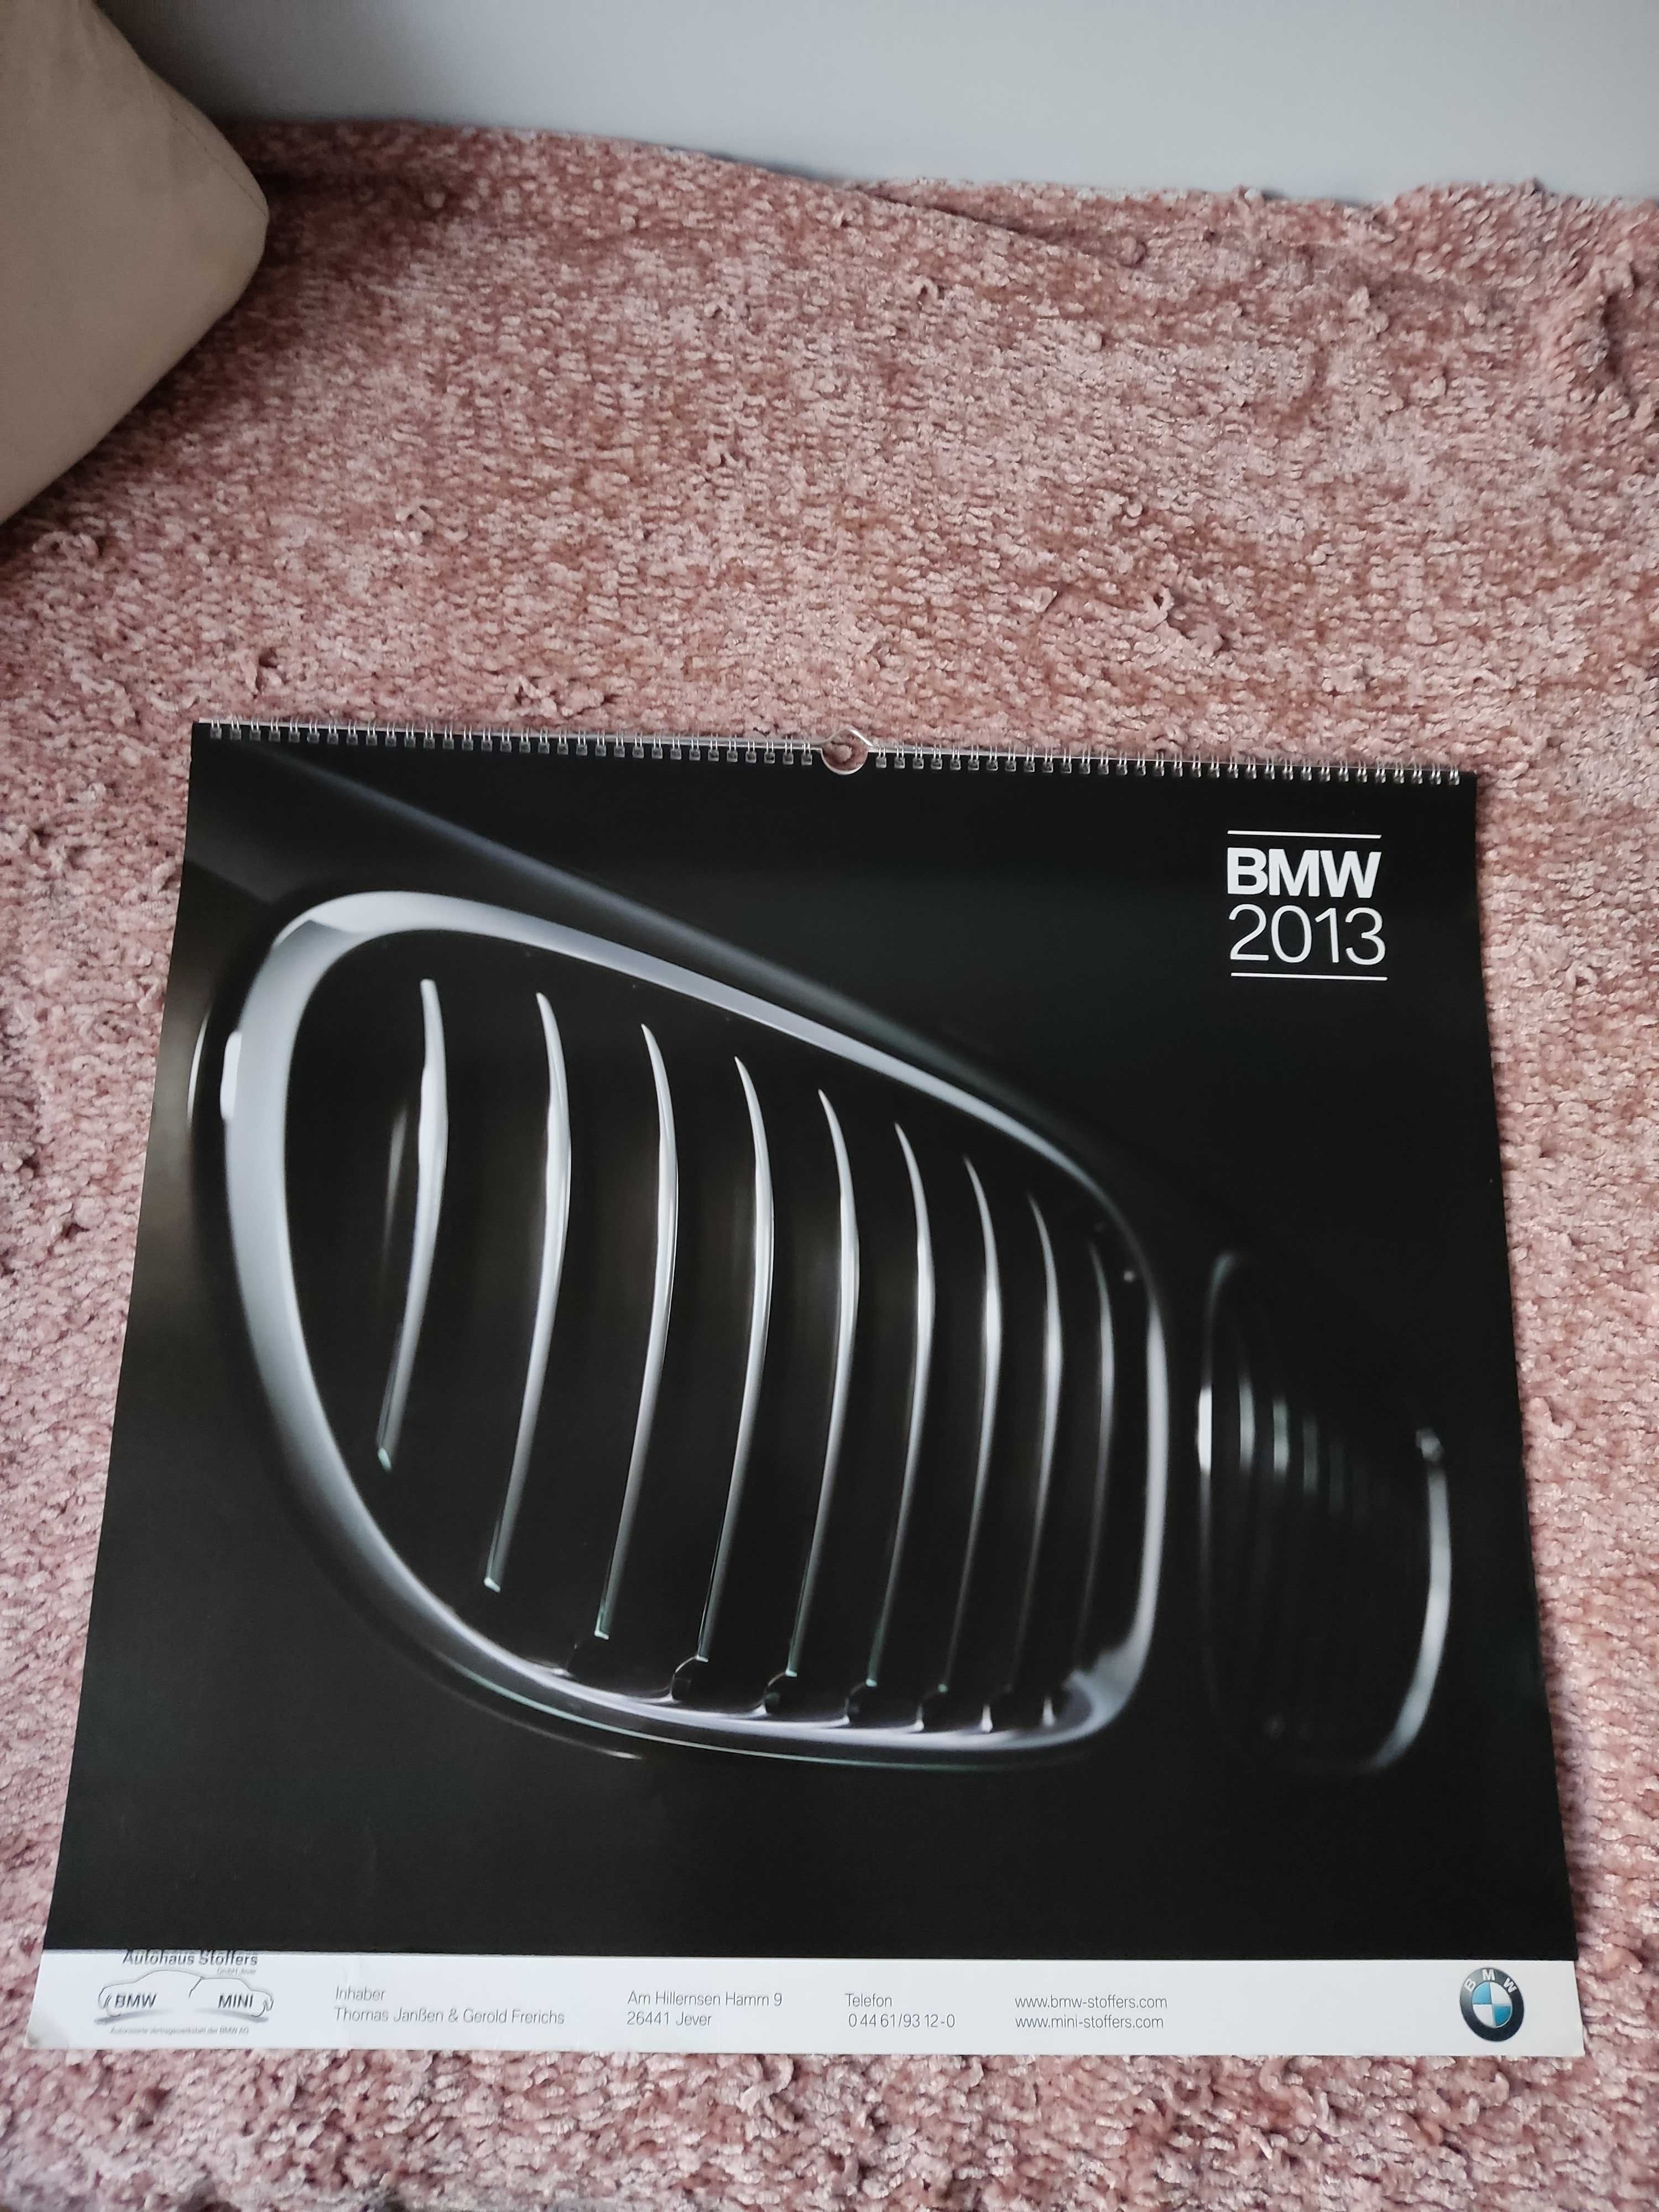 Kalendarz BMW 2013, 58 x 54 cm.